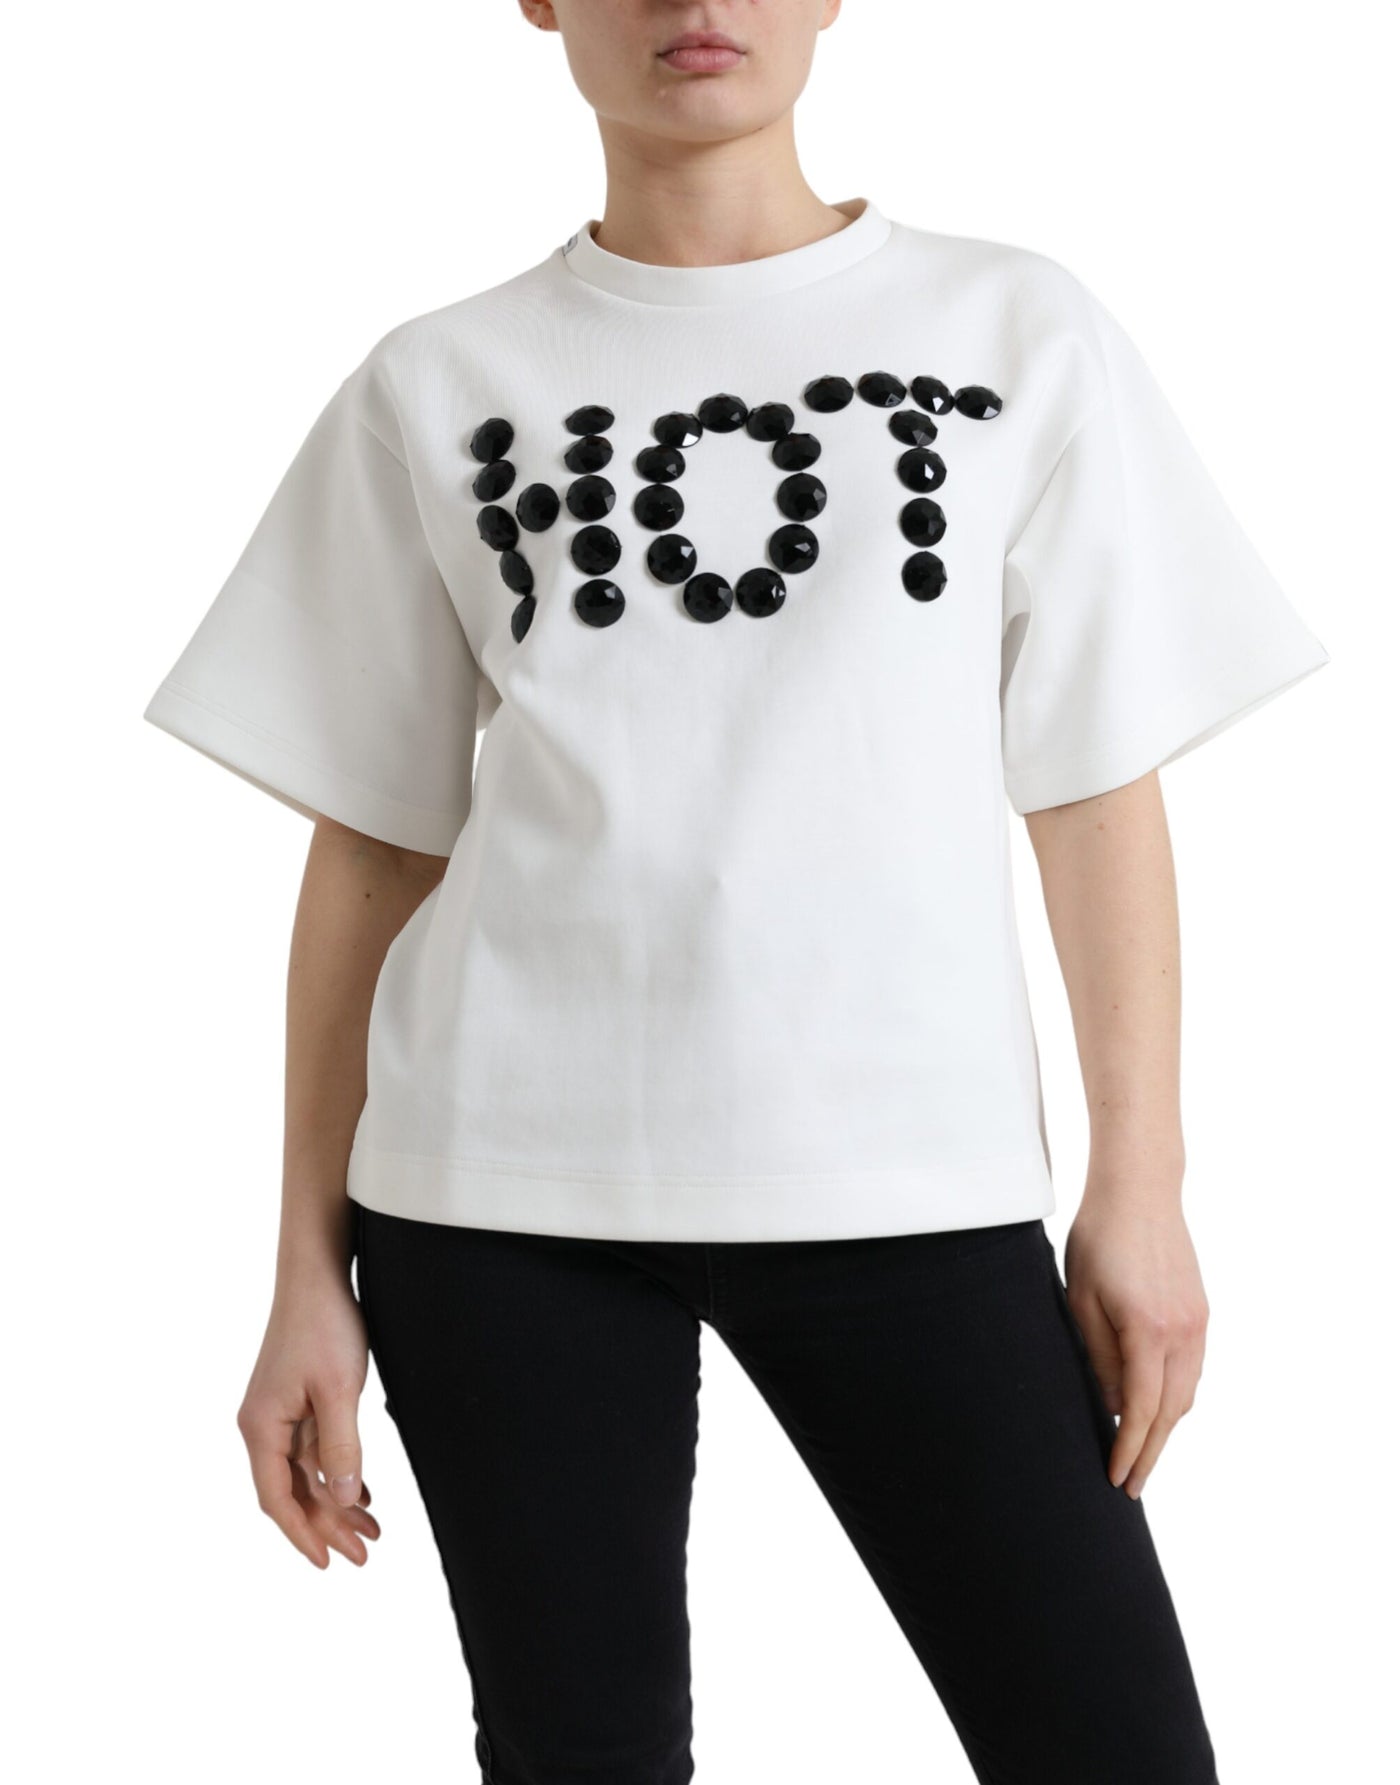 T-shirt White Cotton Stretch Black HOT Crystal